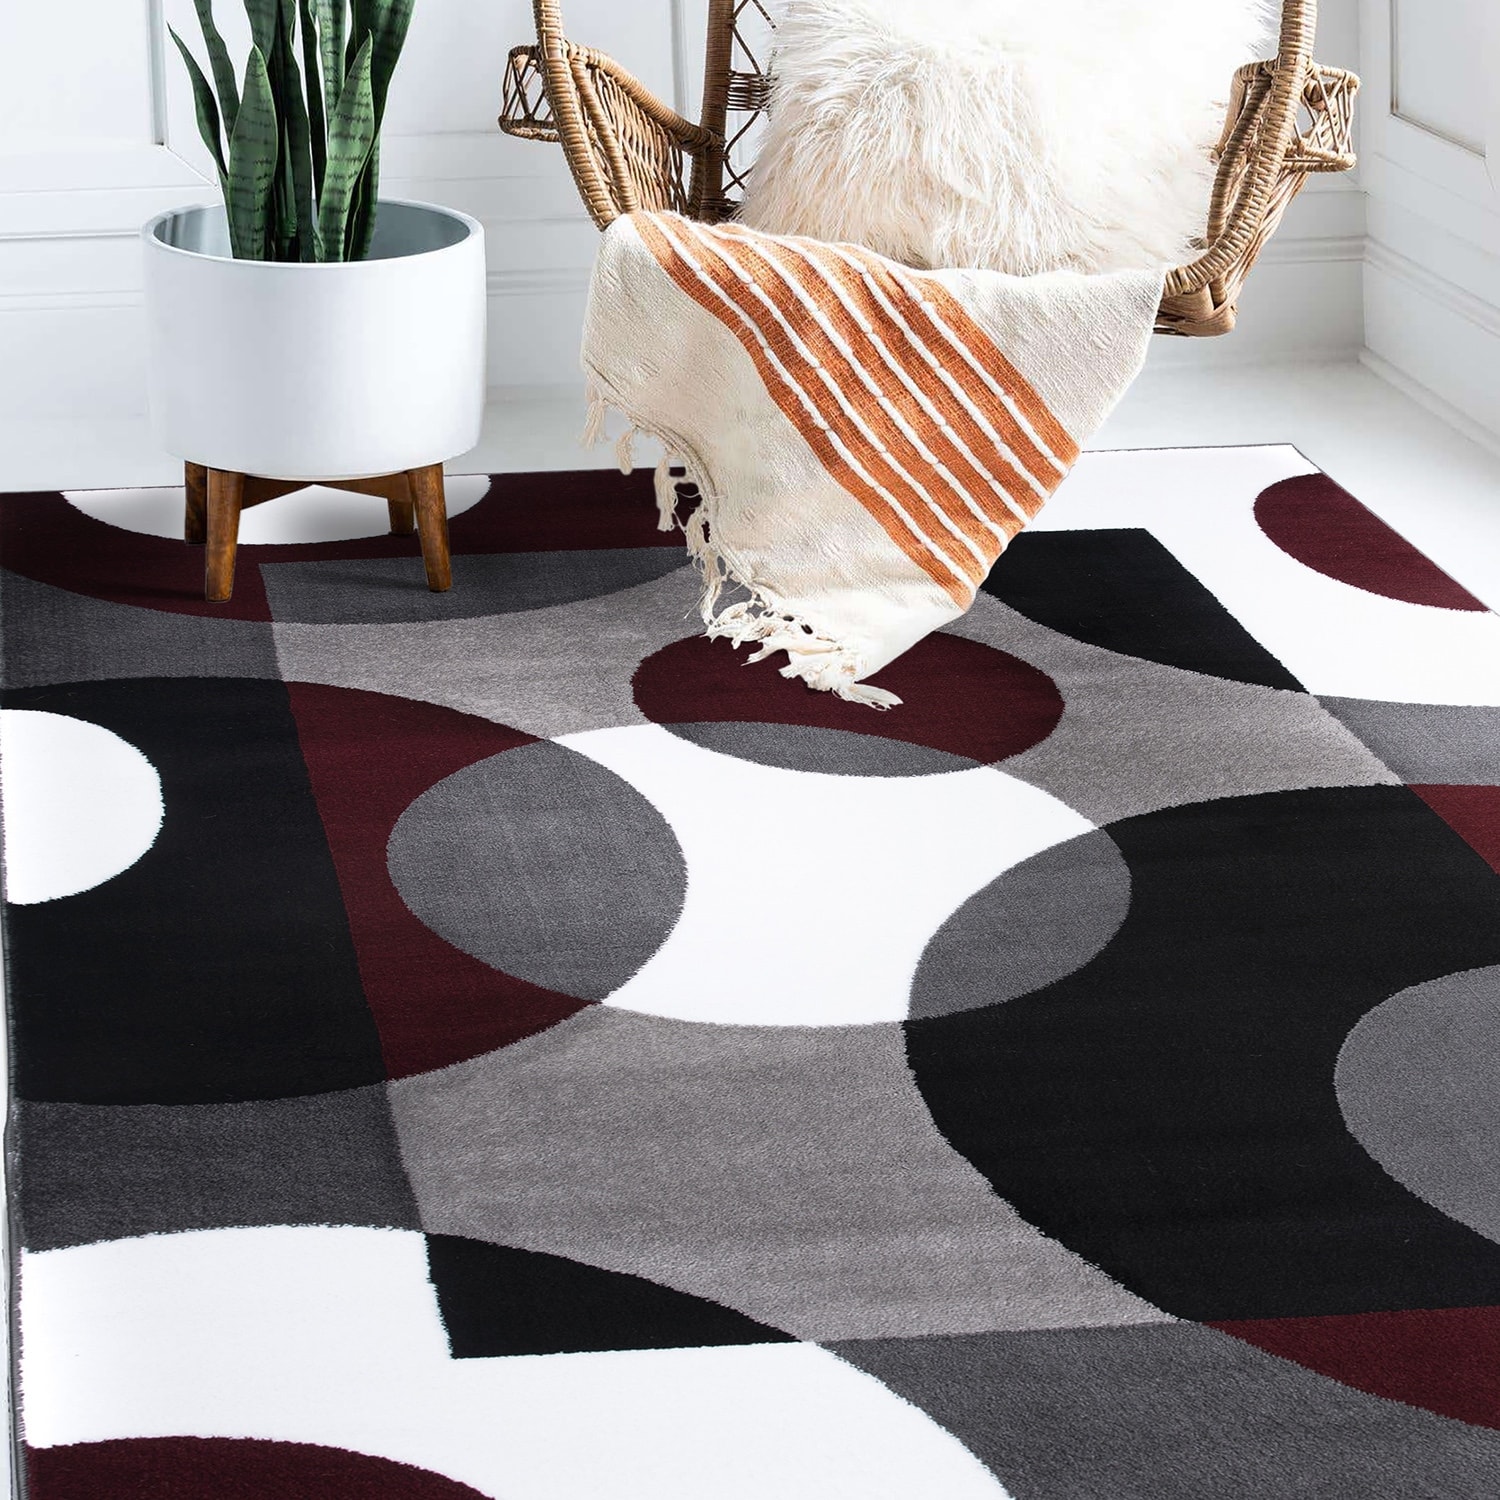 Area Rugs Carpet Flooring Modern Burgundy Living Room Large Size 5'x8' 